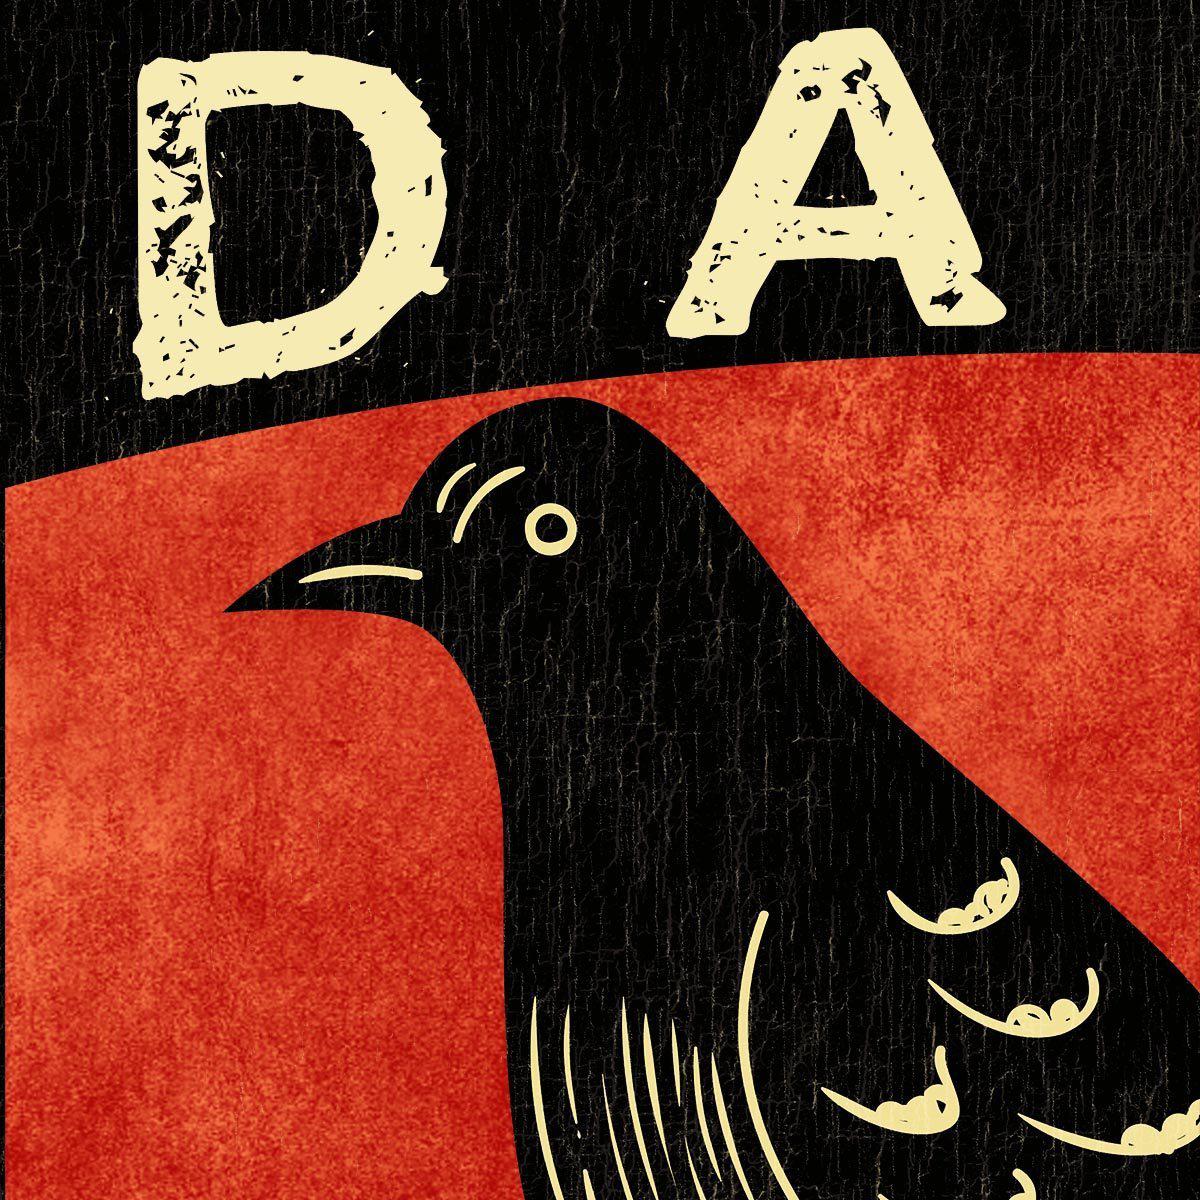 DTG T-Shirt Dada Manifesto, 1918 T-Shirt (Surrealism Inspiration) Crow, Raven, Fine Art Graphic Tee